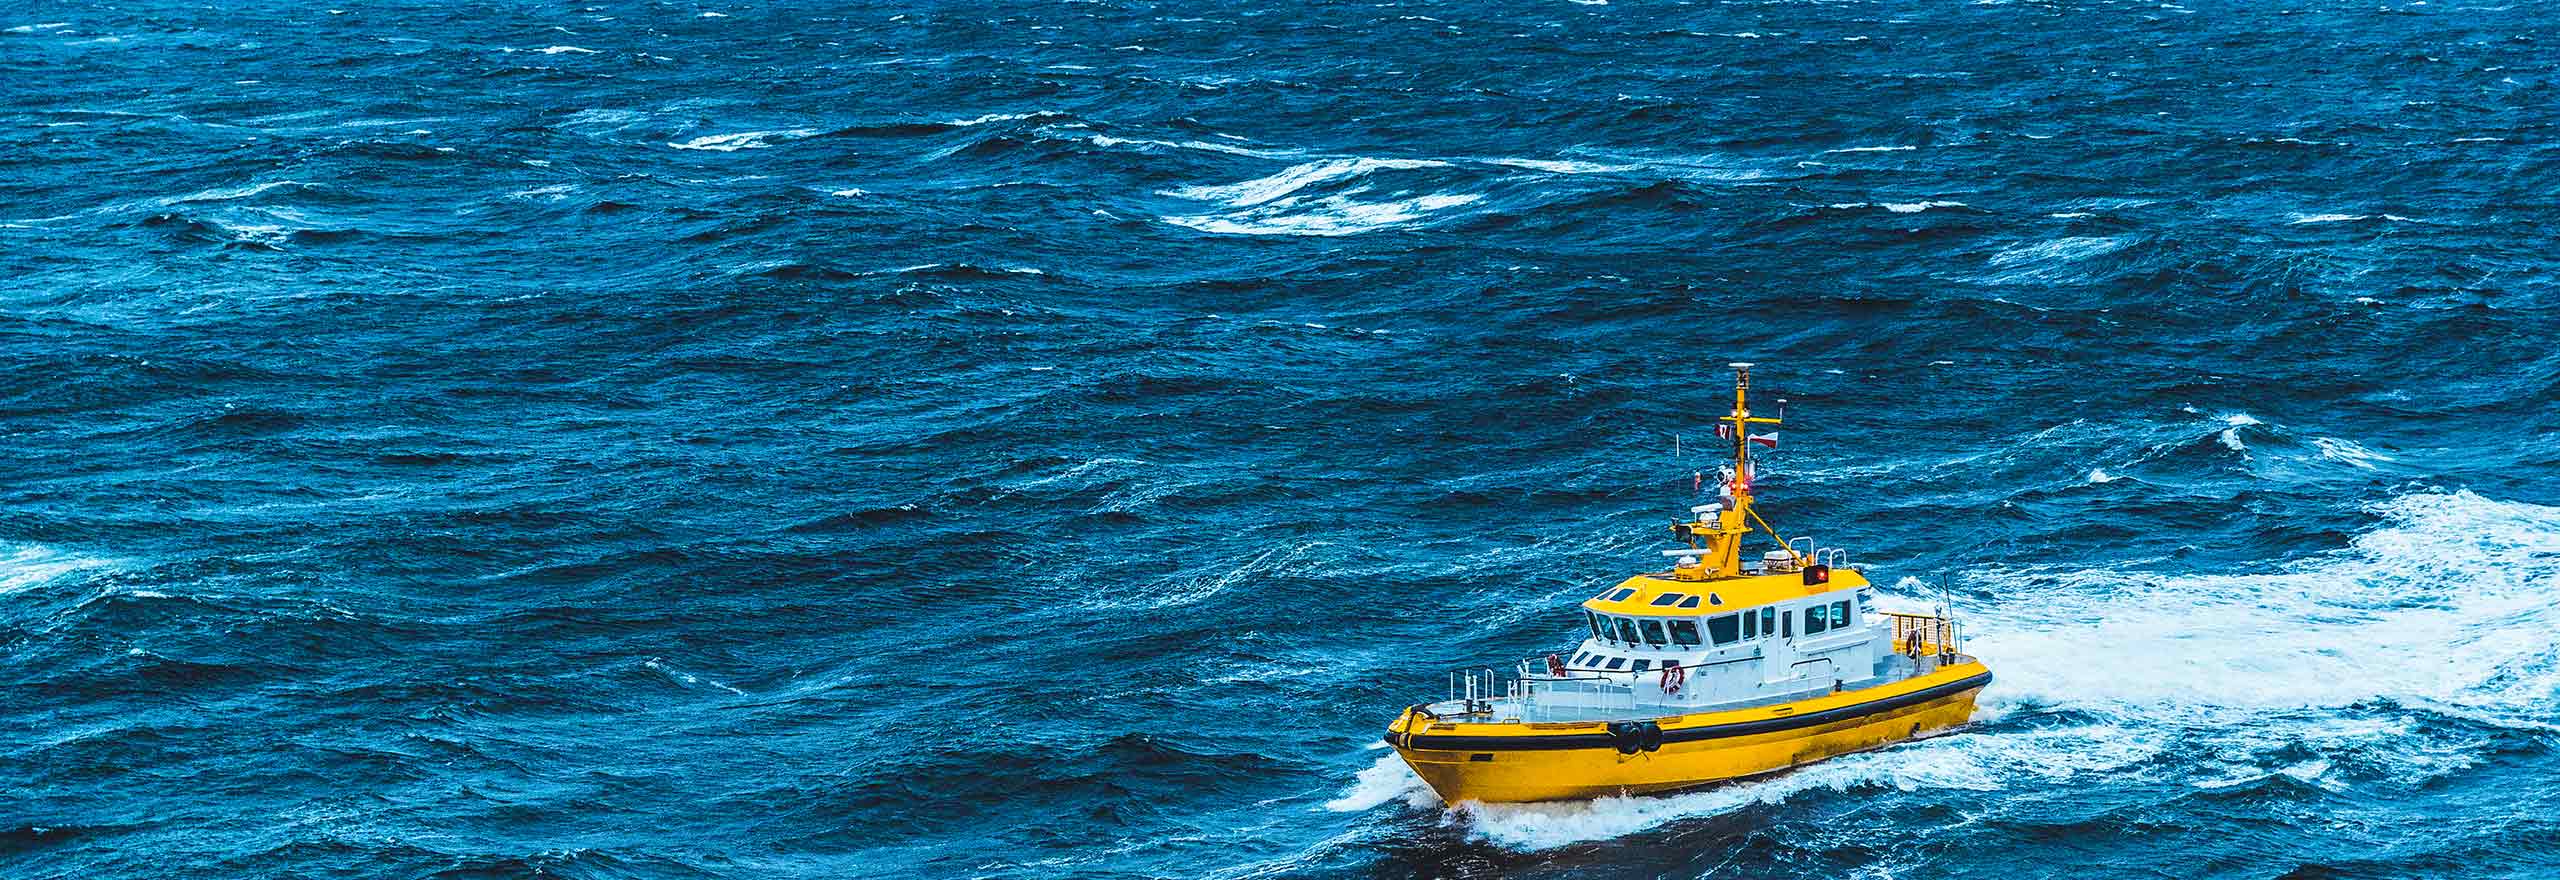 Navire de garde-côte jaune naviguant dans une mer houleuse.